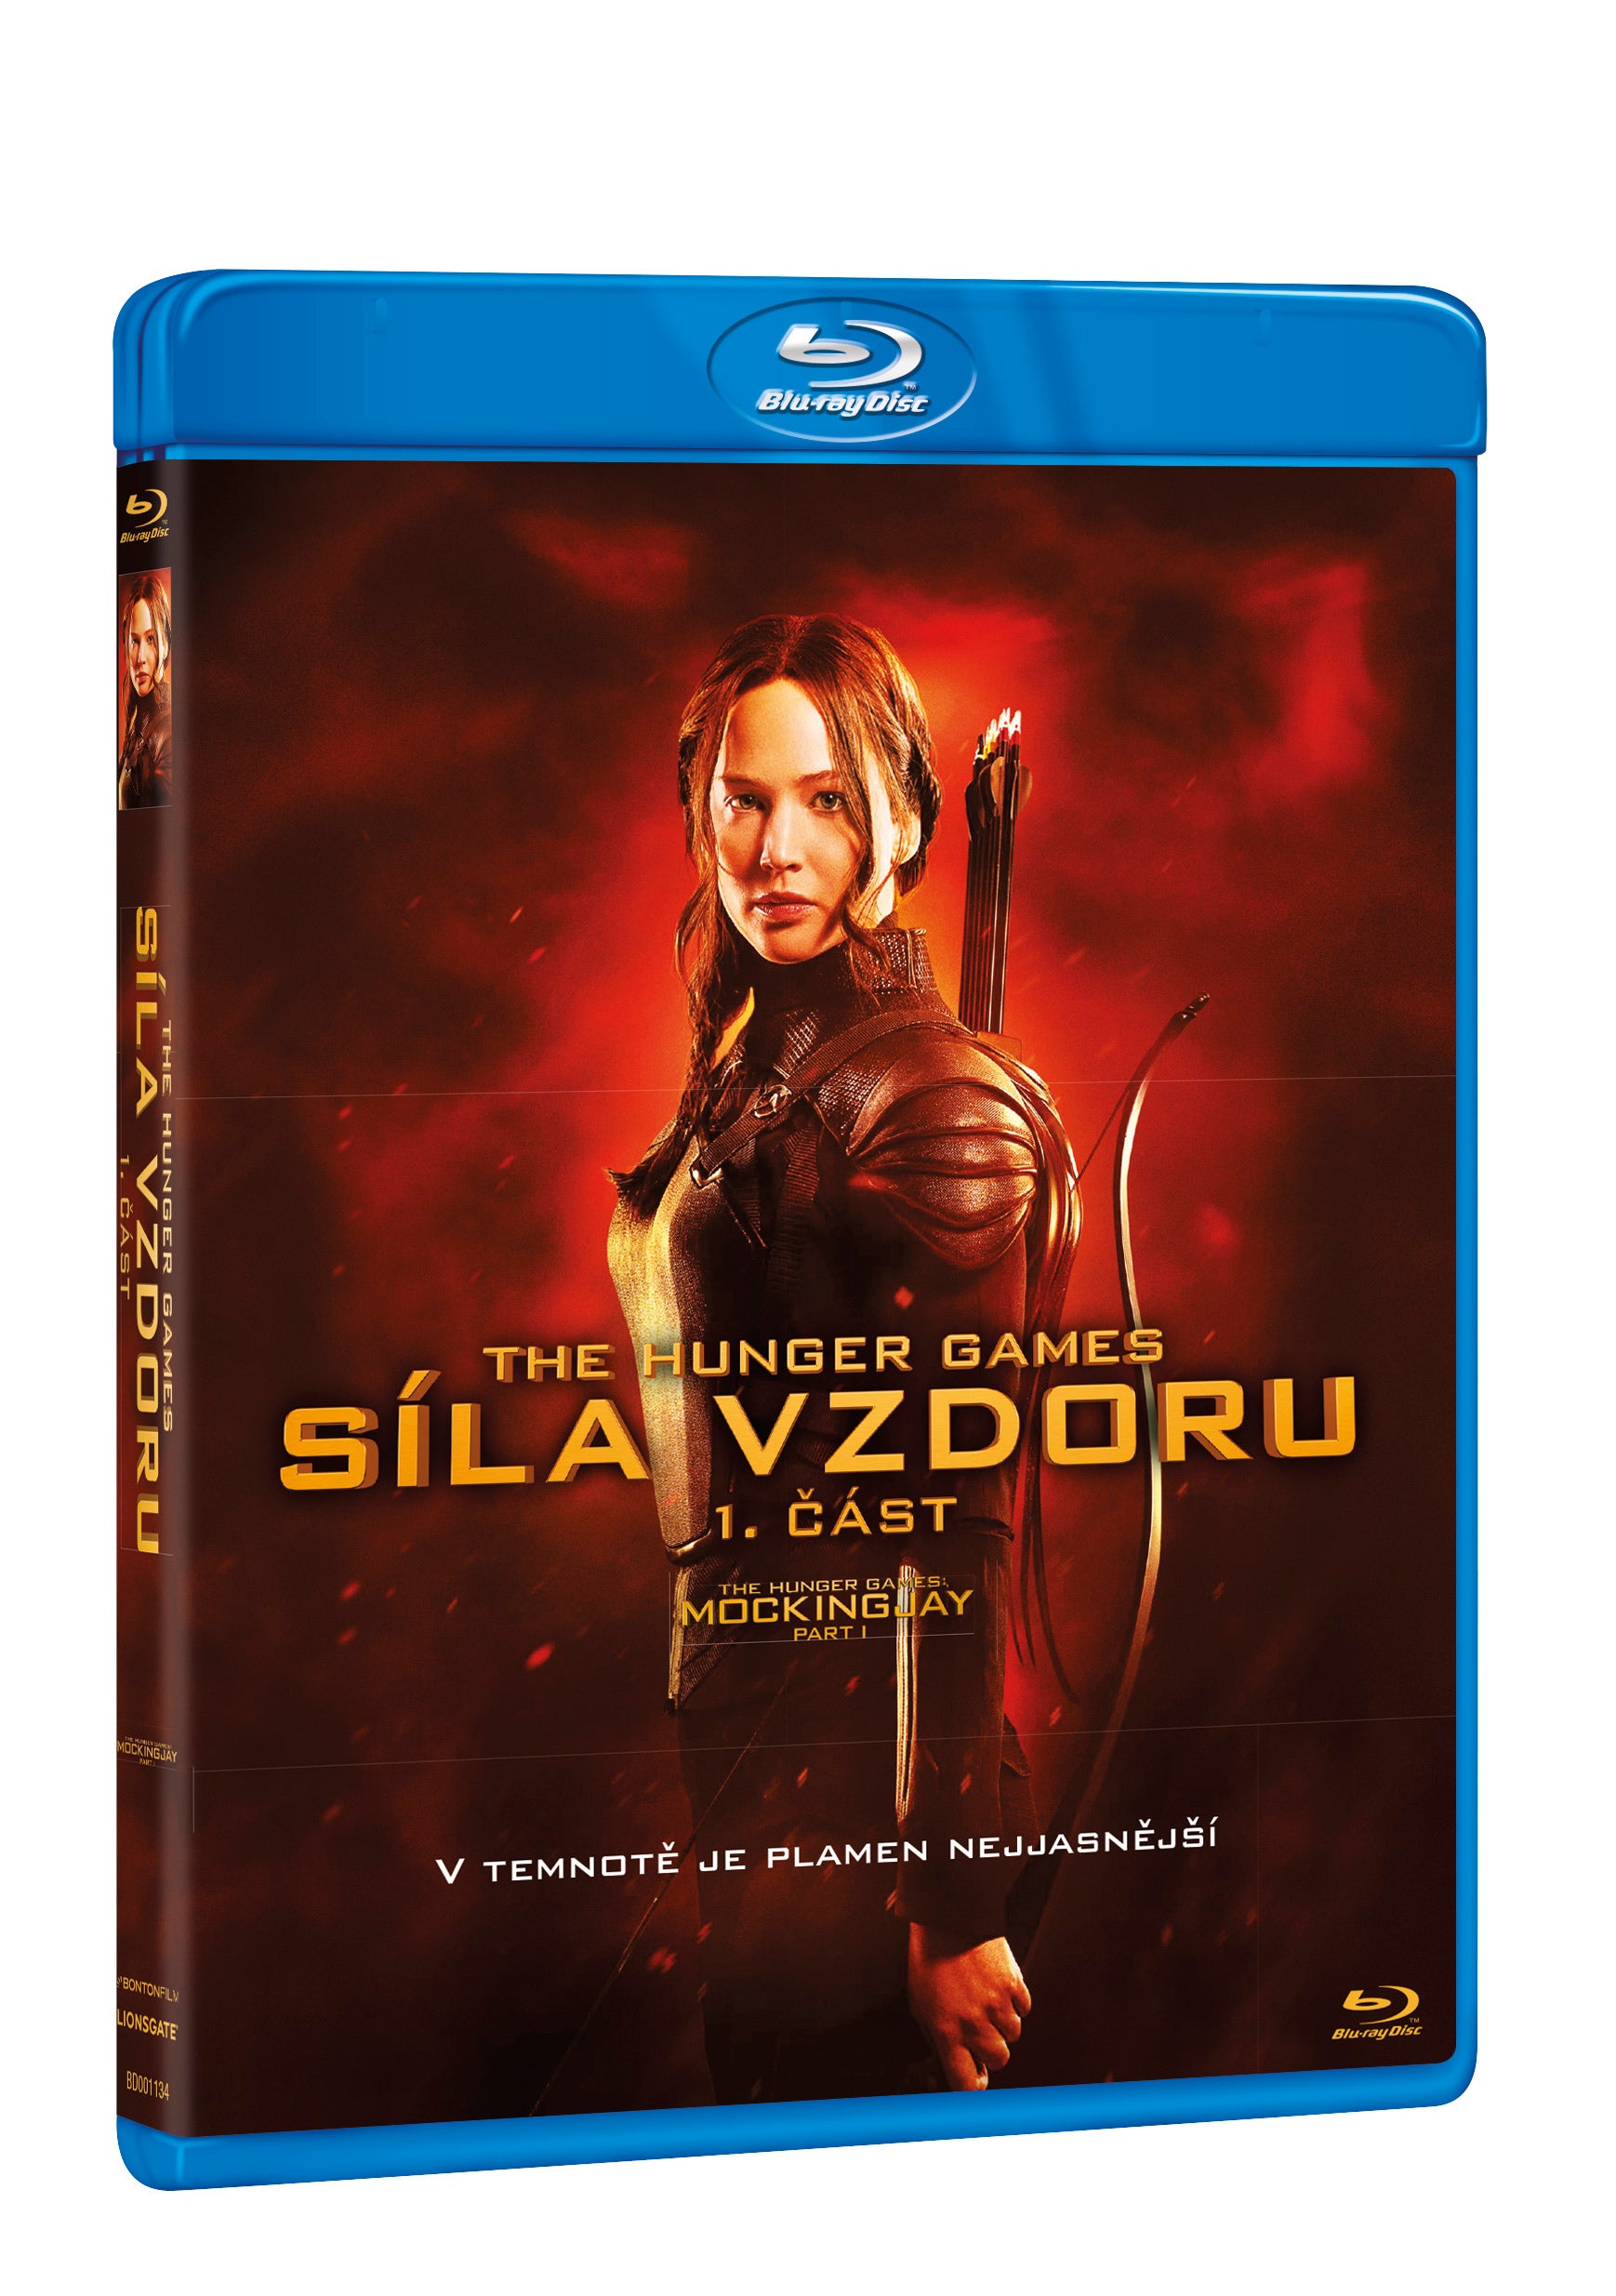 Hunger Games: Sila vzdoru 1. cast BD / The Hunger Games: Mockingjay - Part 1 - Czech version